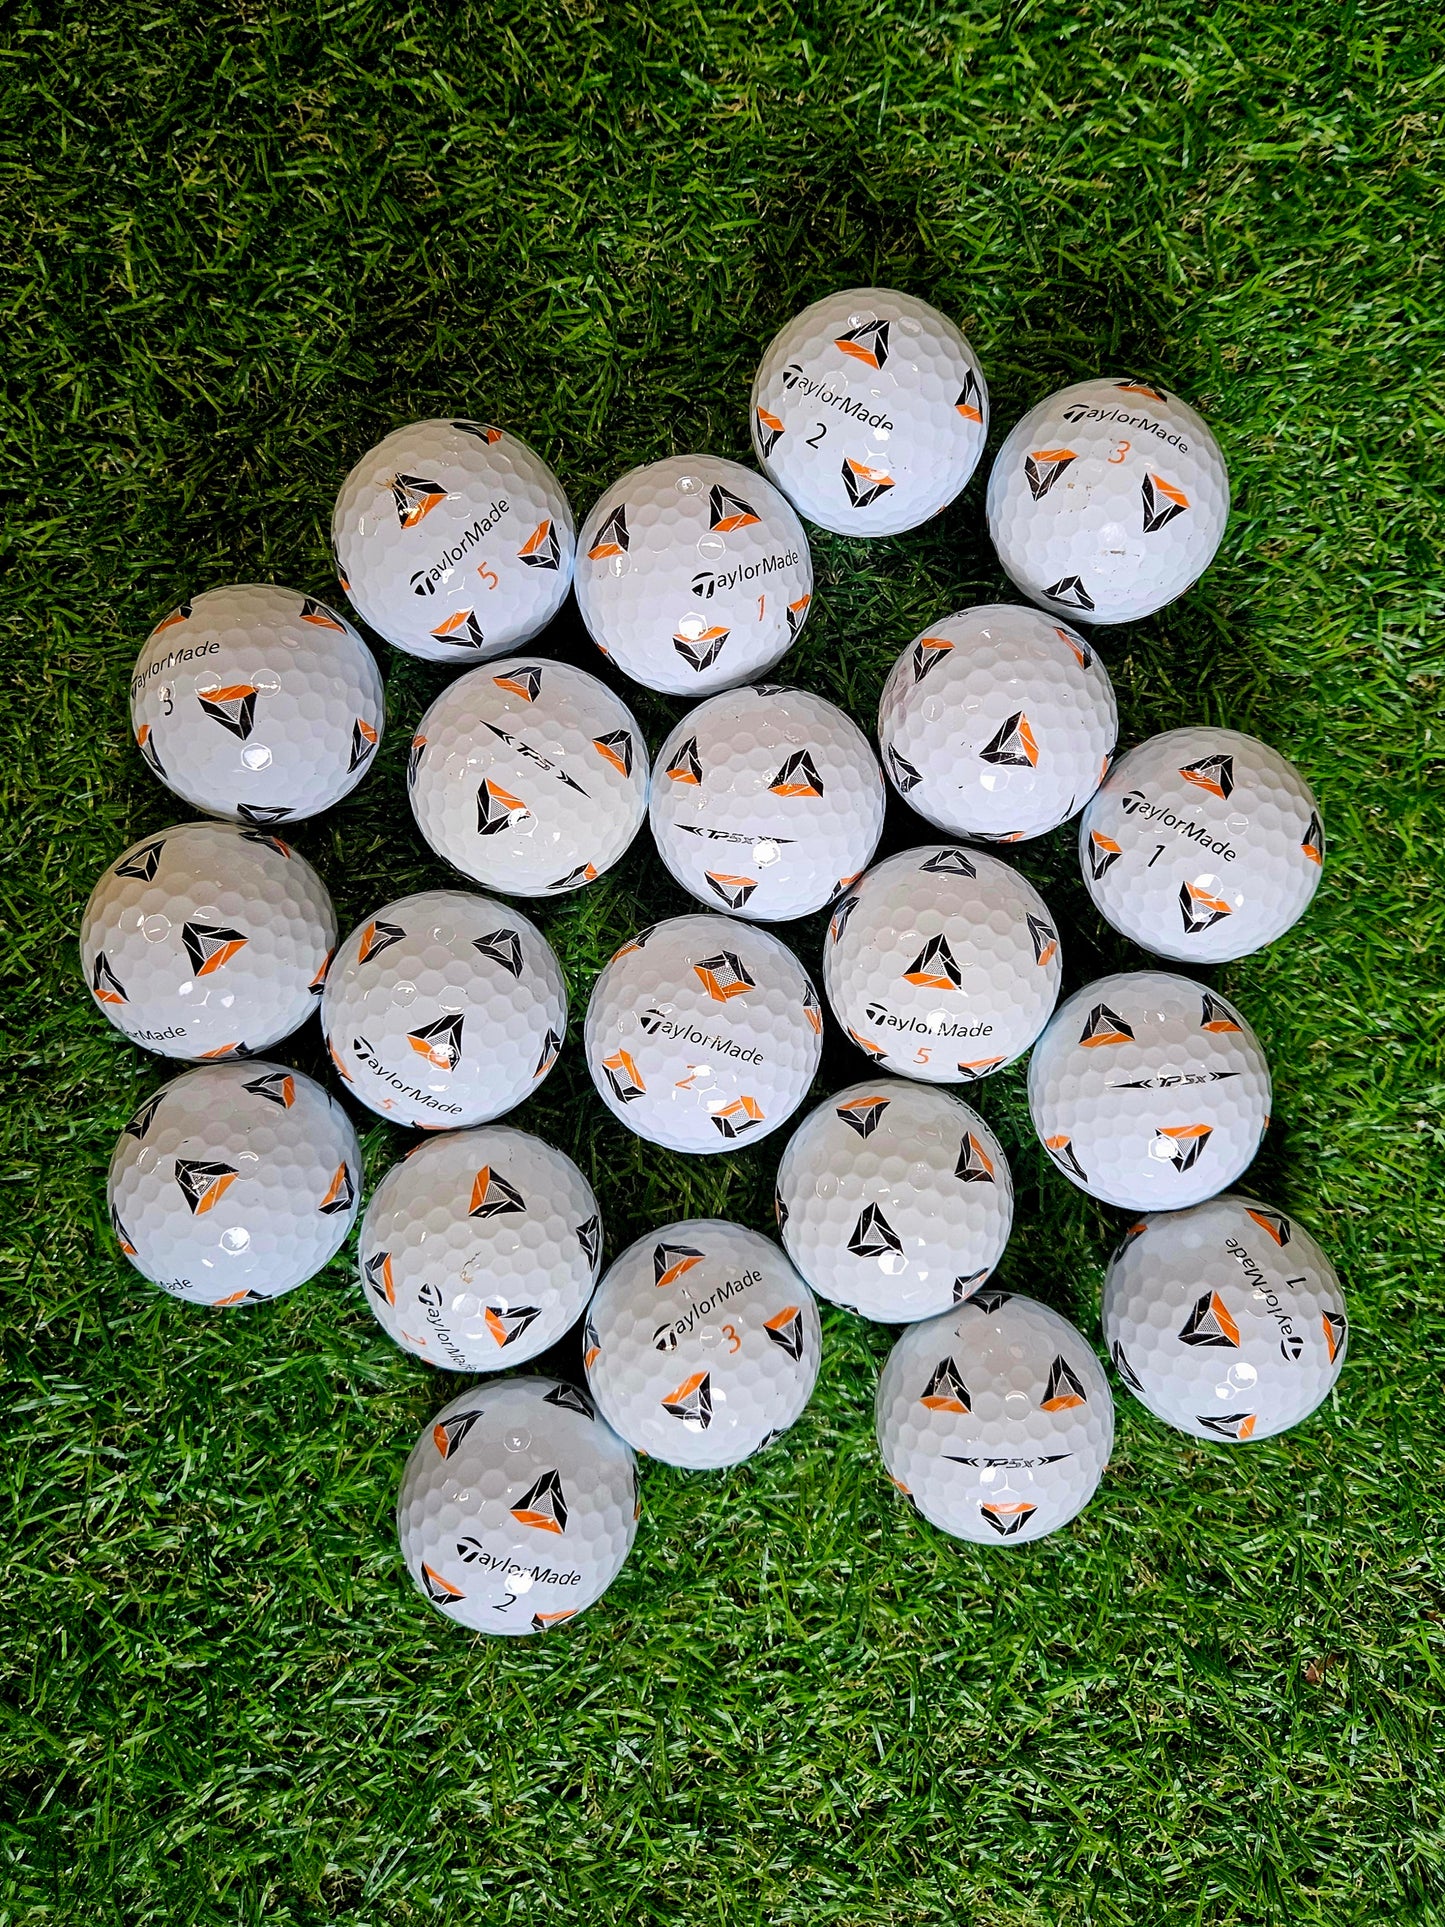 Taylormade TP5 Pix - Pack of 10 golf balls